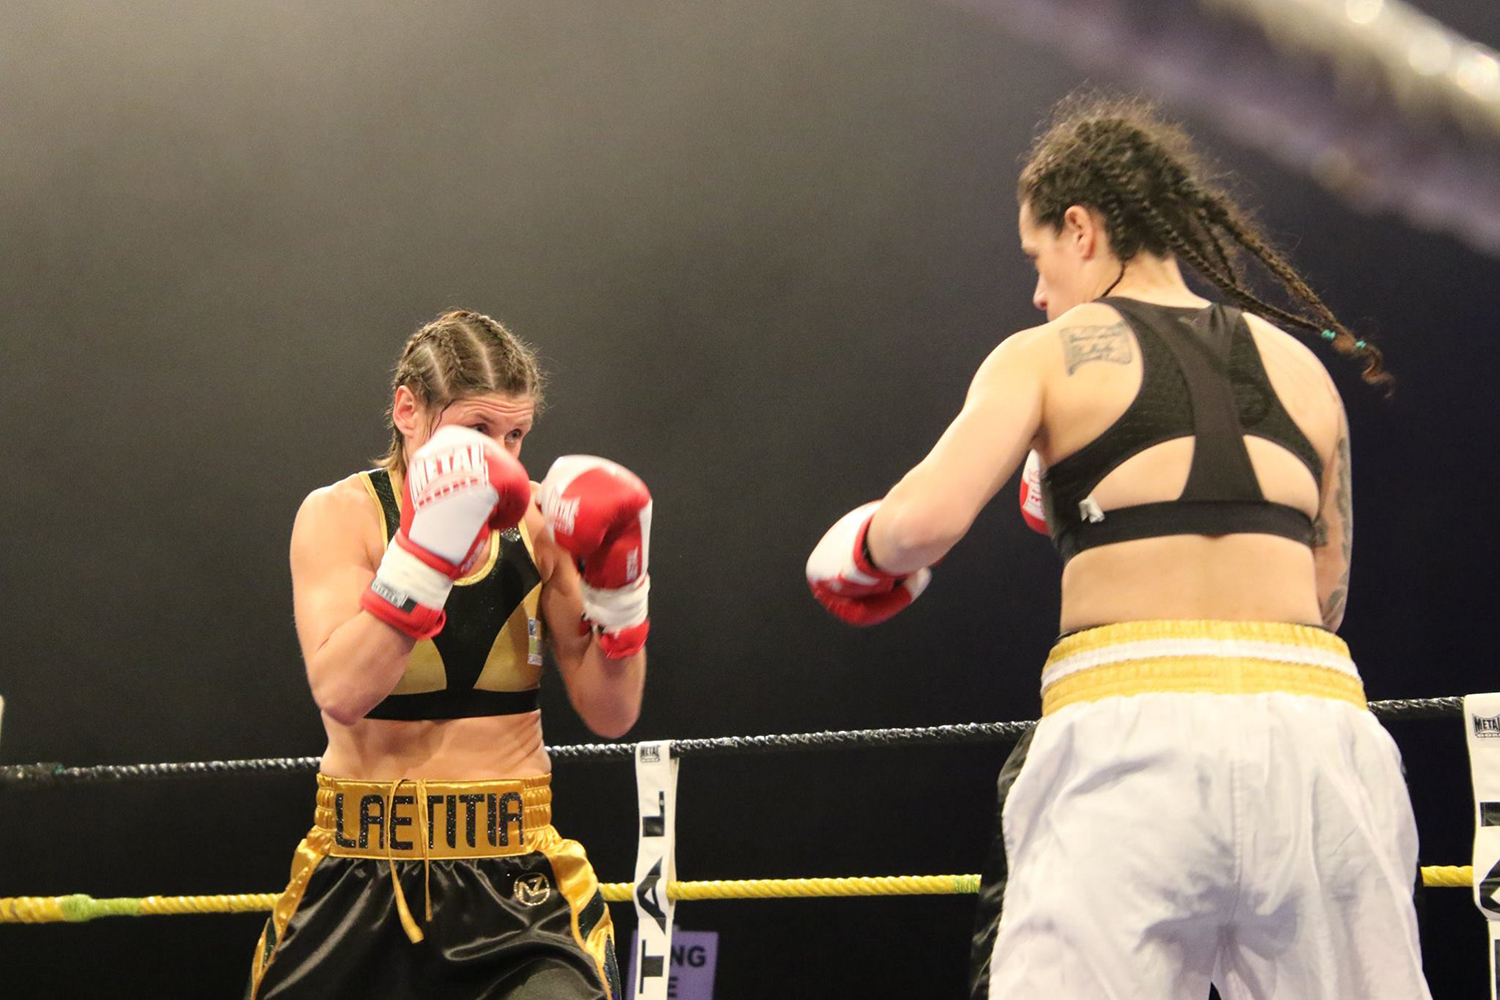 Elle remporte le combat face à la serbe Aleksandra Vujovic.